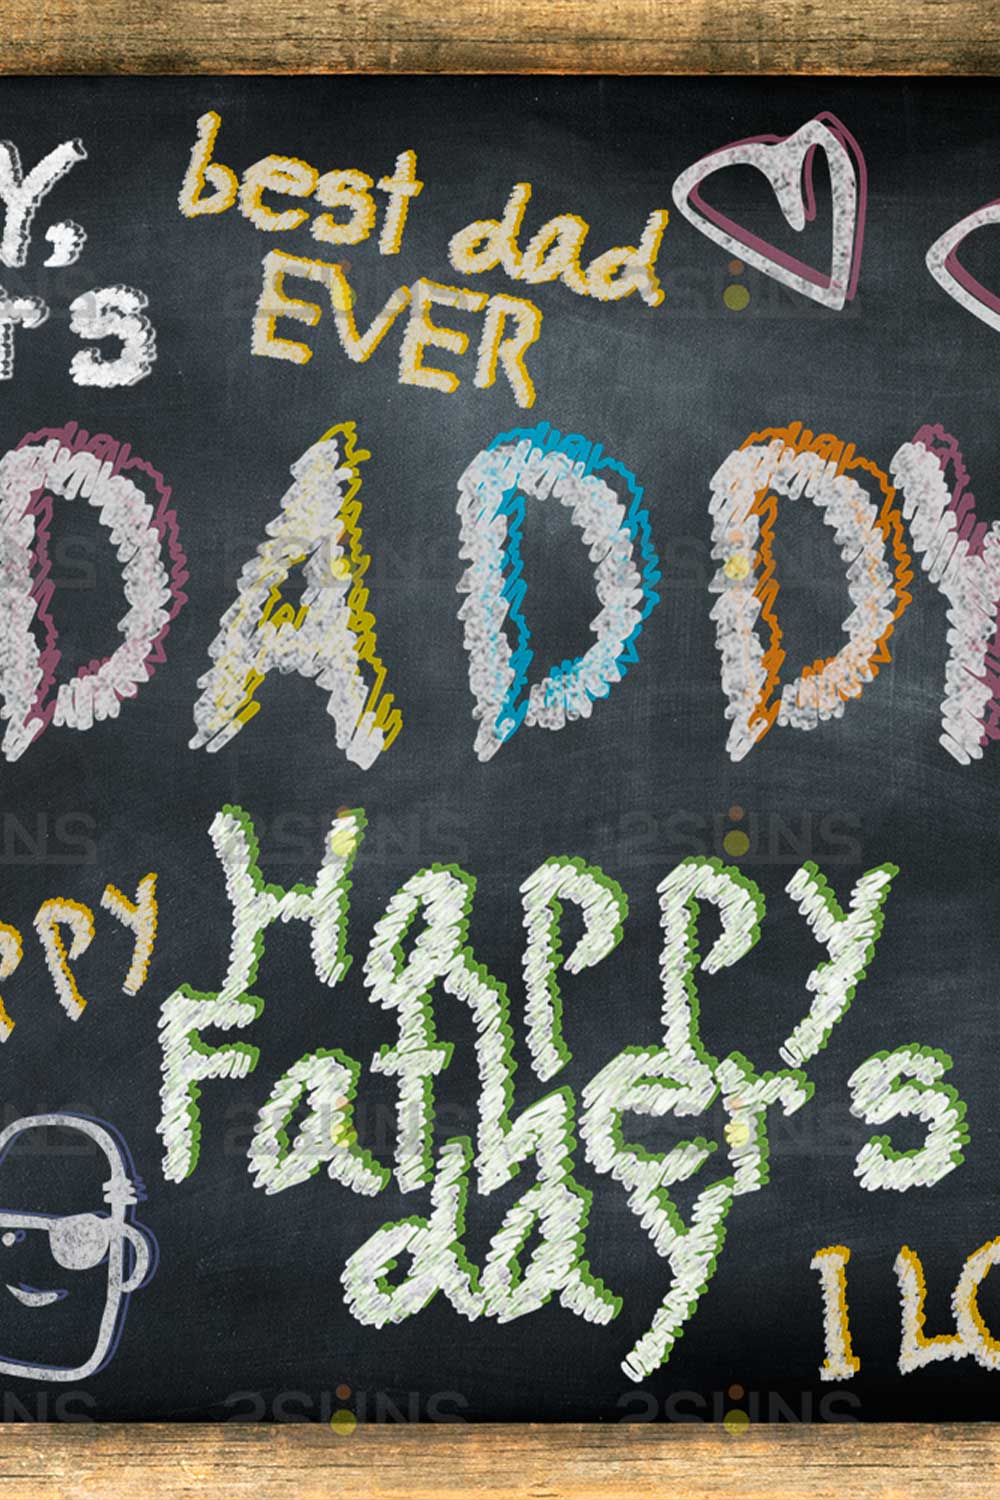 Fathers Day Sidewalk Chalkboard Art Overlay pinterest image.